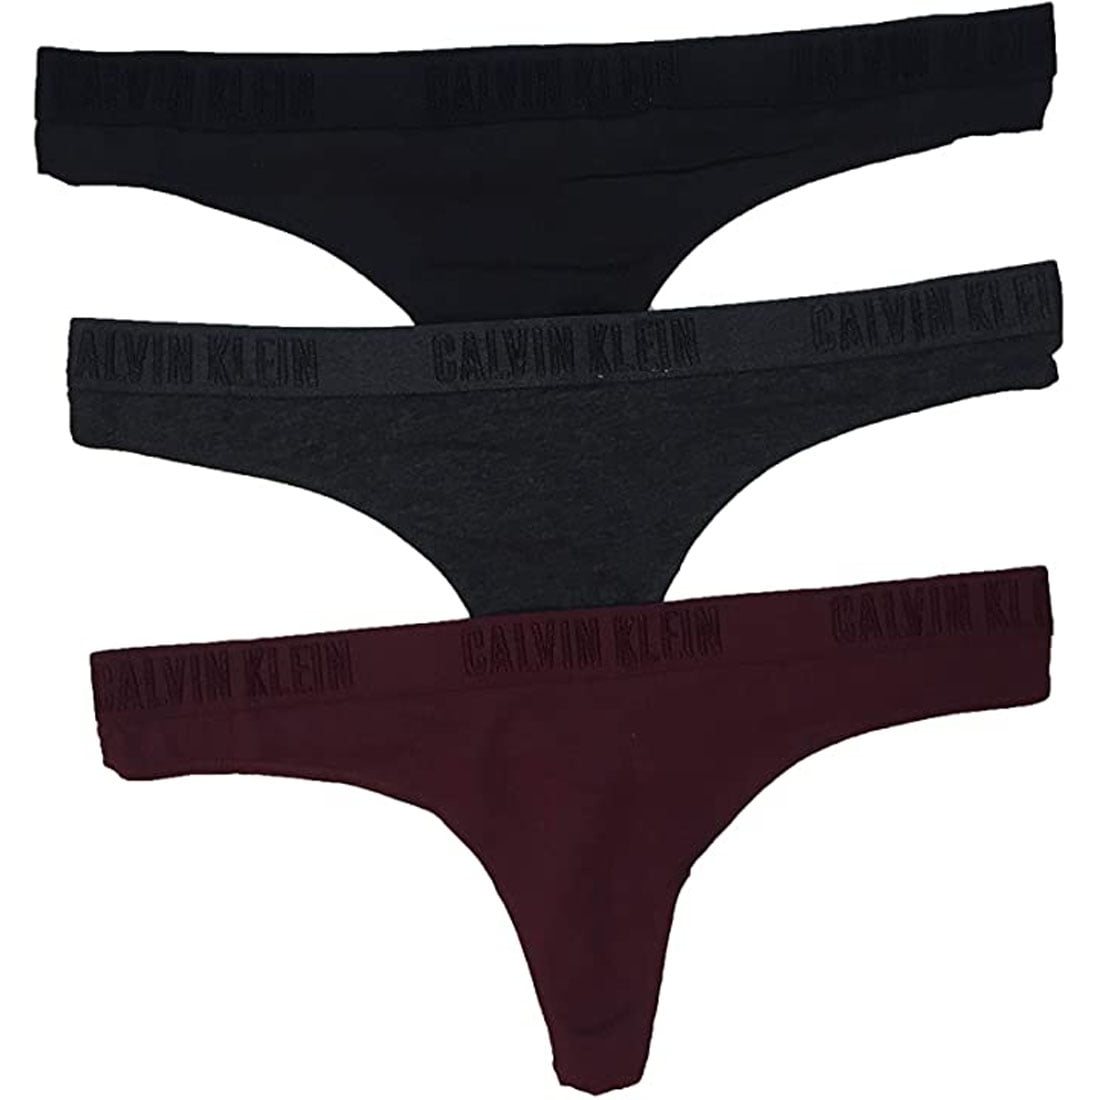 Calvin Klein Underwear Women`s Carousel Thong 3 Pack, Black/Bardo